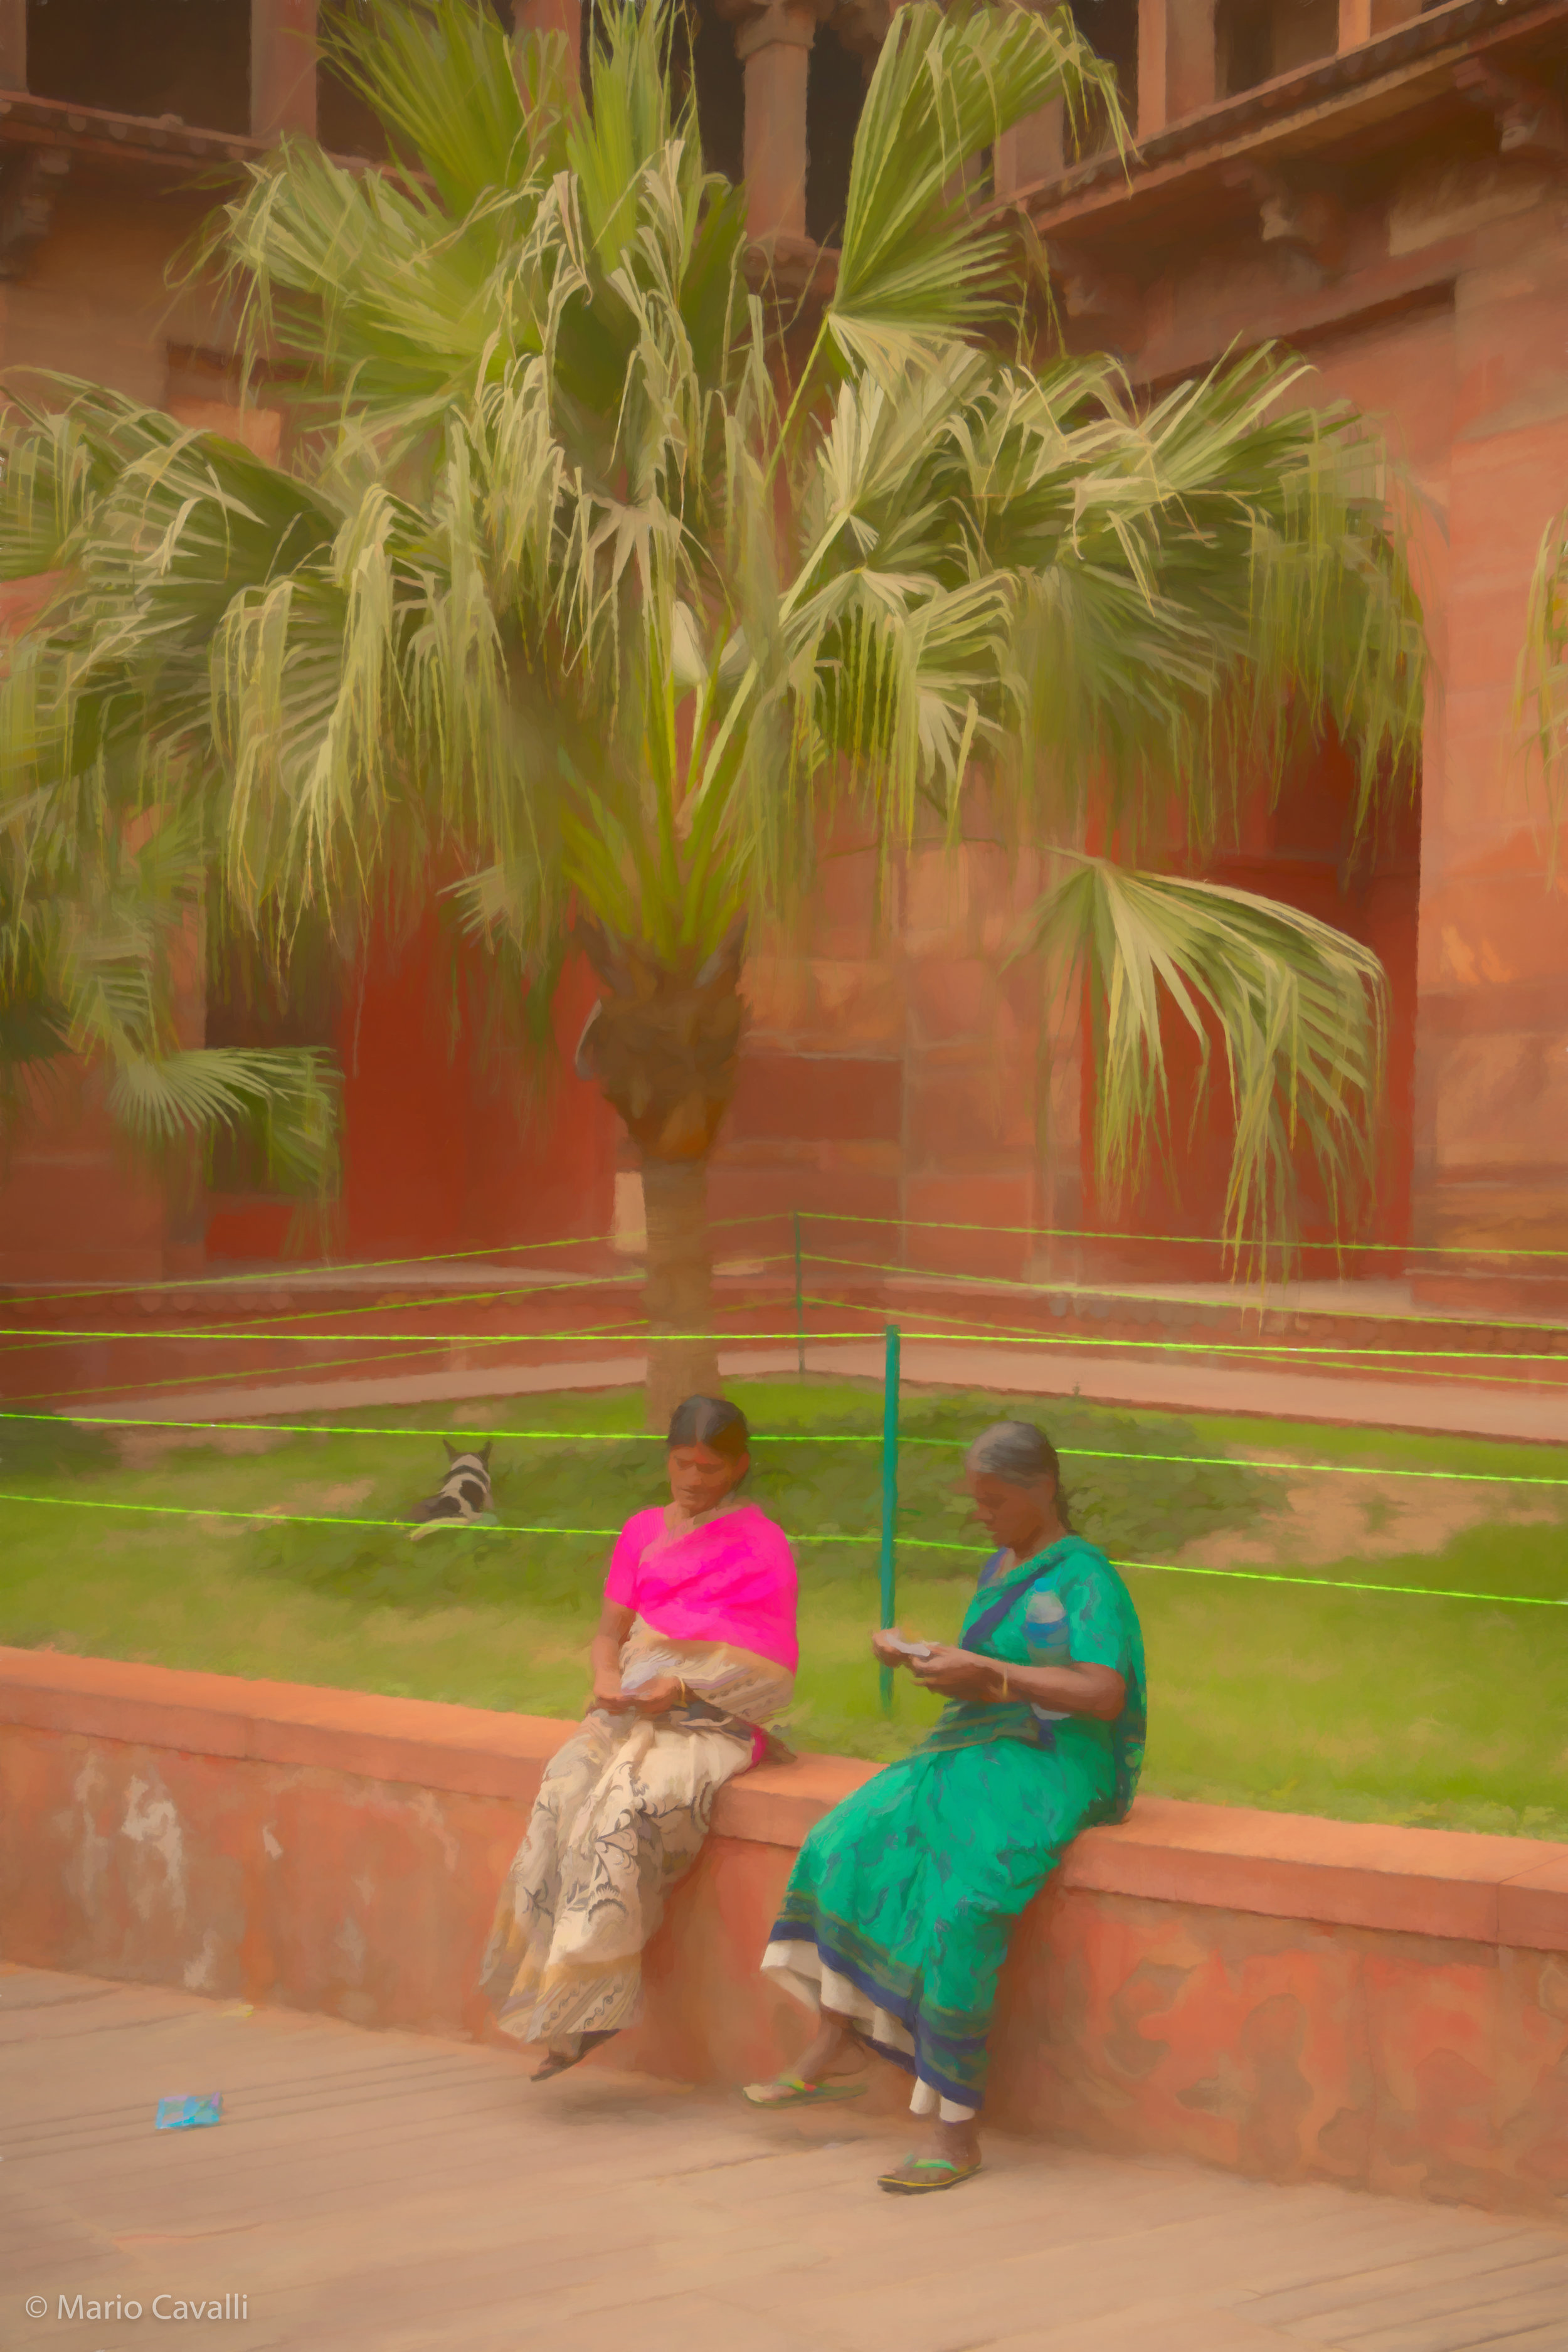 Resting, Agra Fort